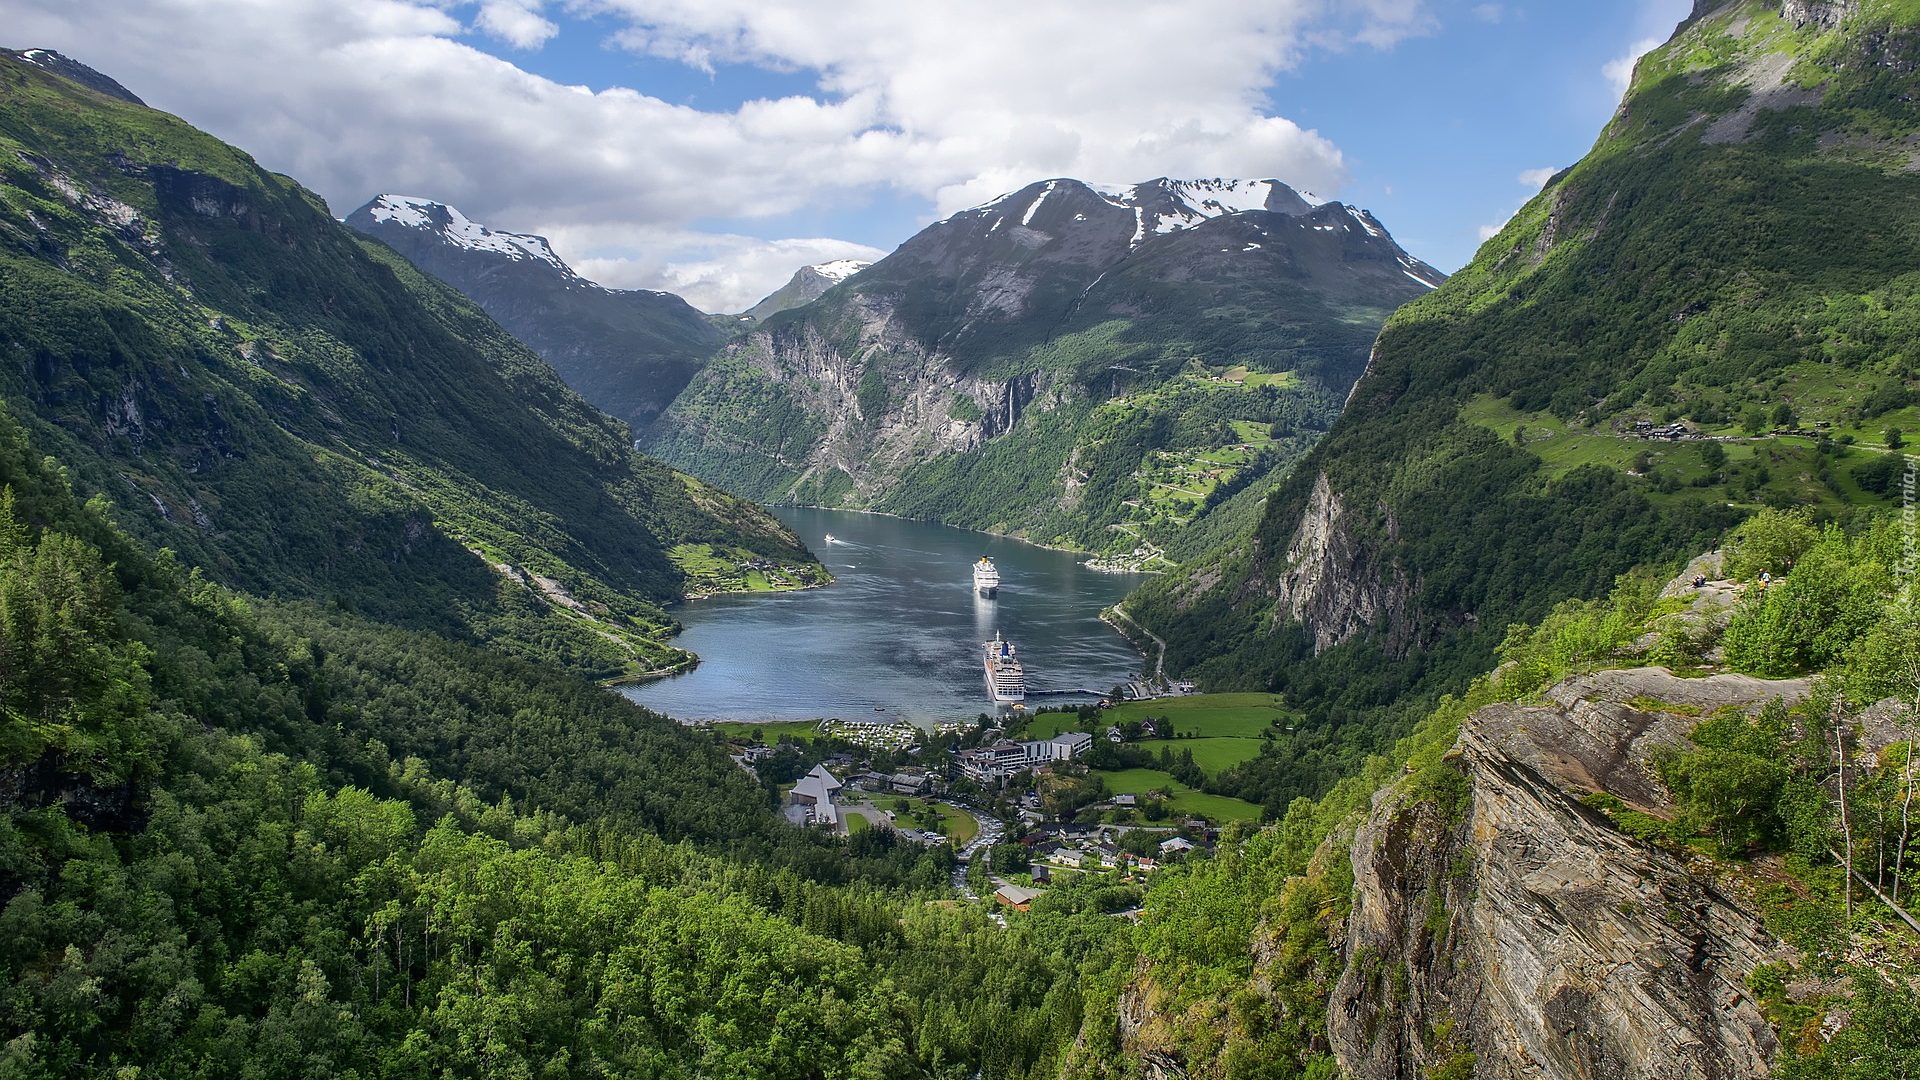 Góry, Niebo, Chmury, Lasy, Statki pasażerskie, Fiord Geirangerfjorden, Wioska Geiranger, Norwegia